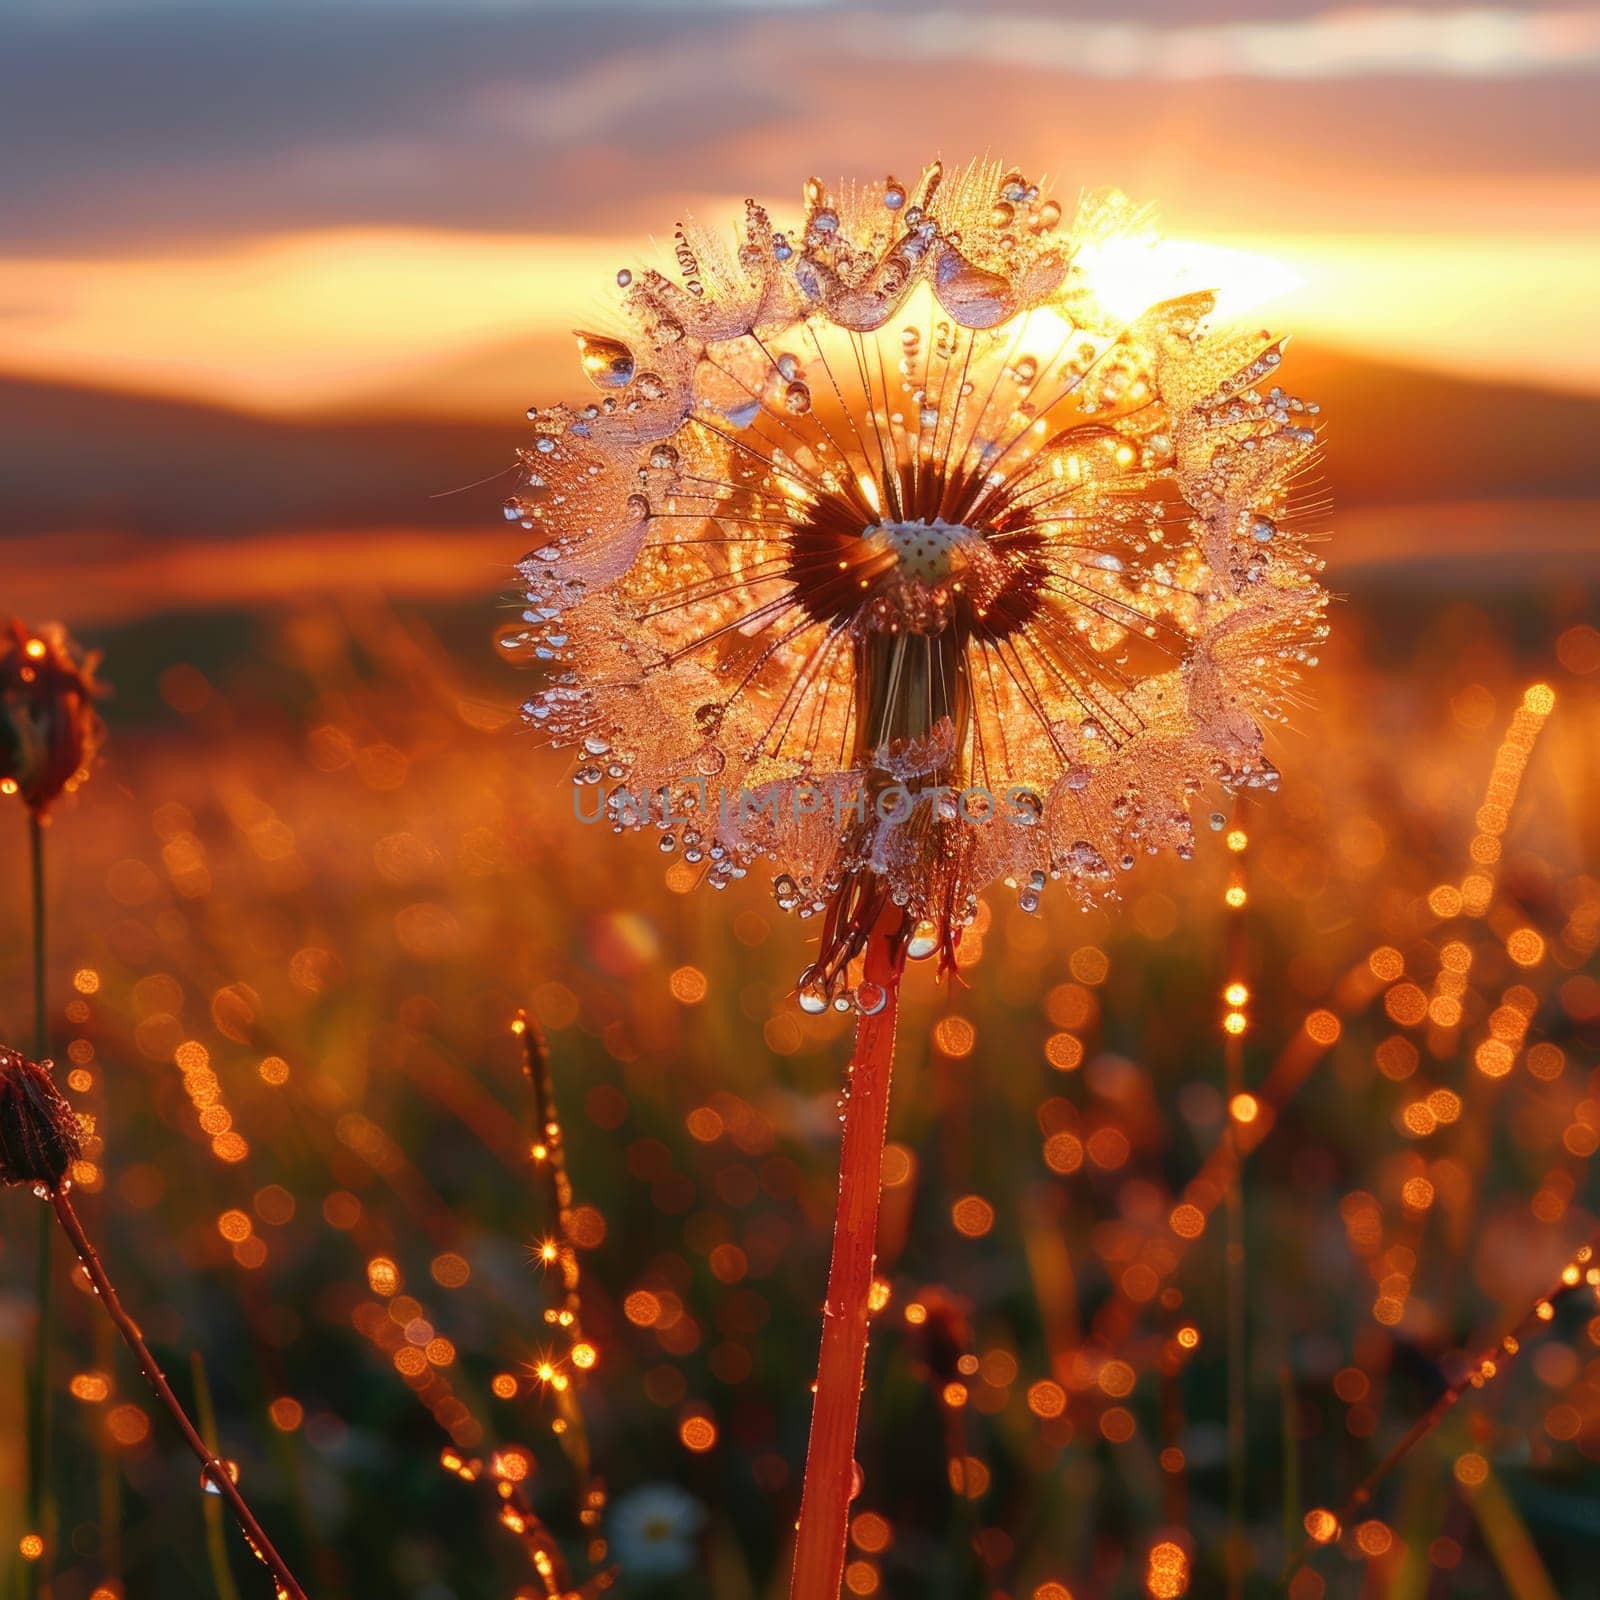 A dandelion in focus against a bright sun backdrop in a close-up shot.